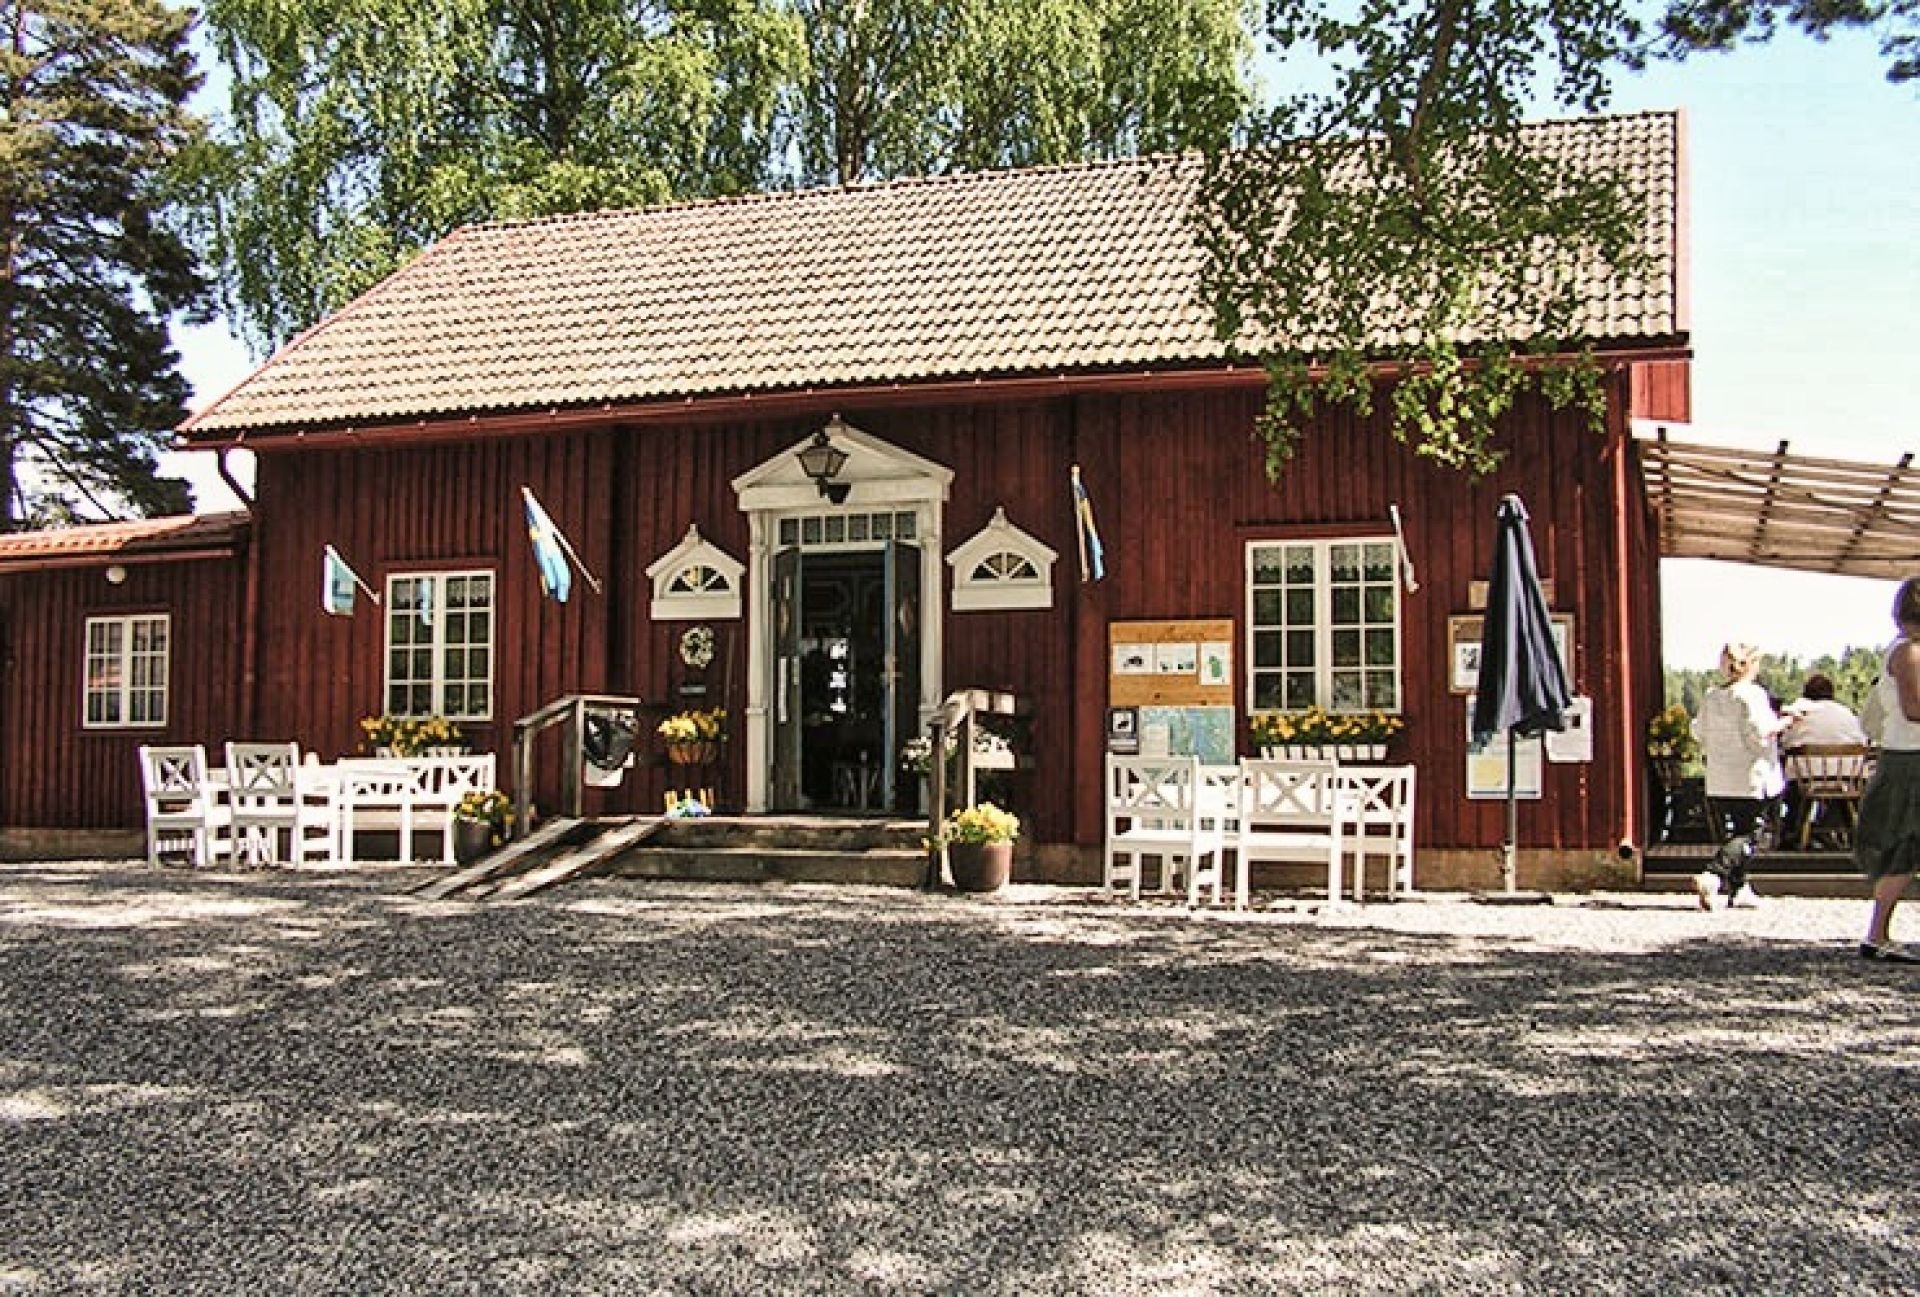 Café in Värmskog